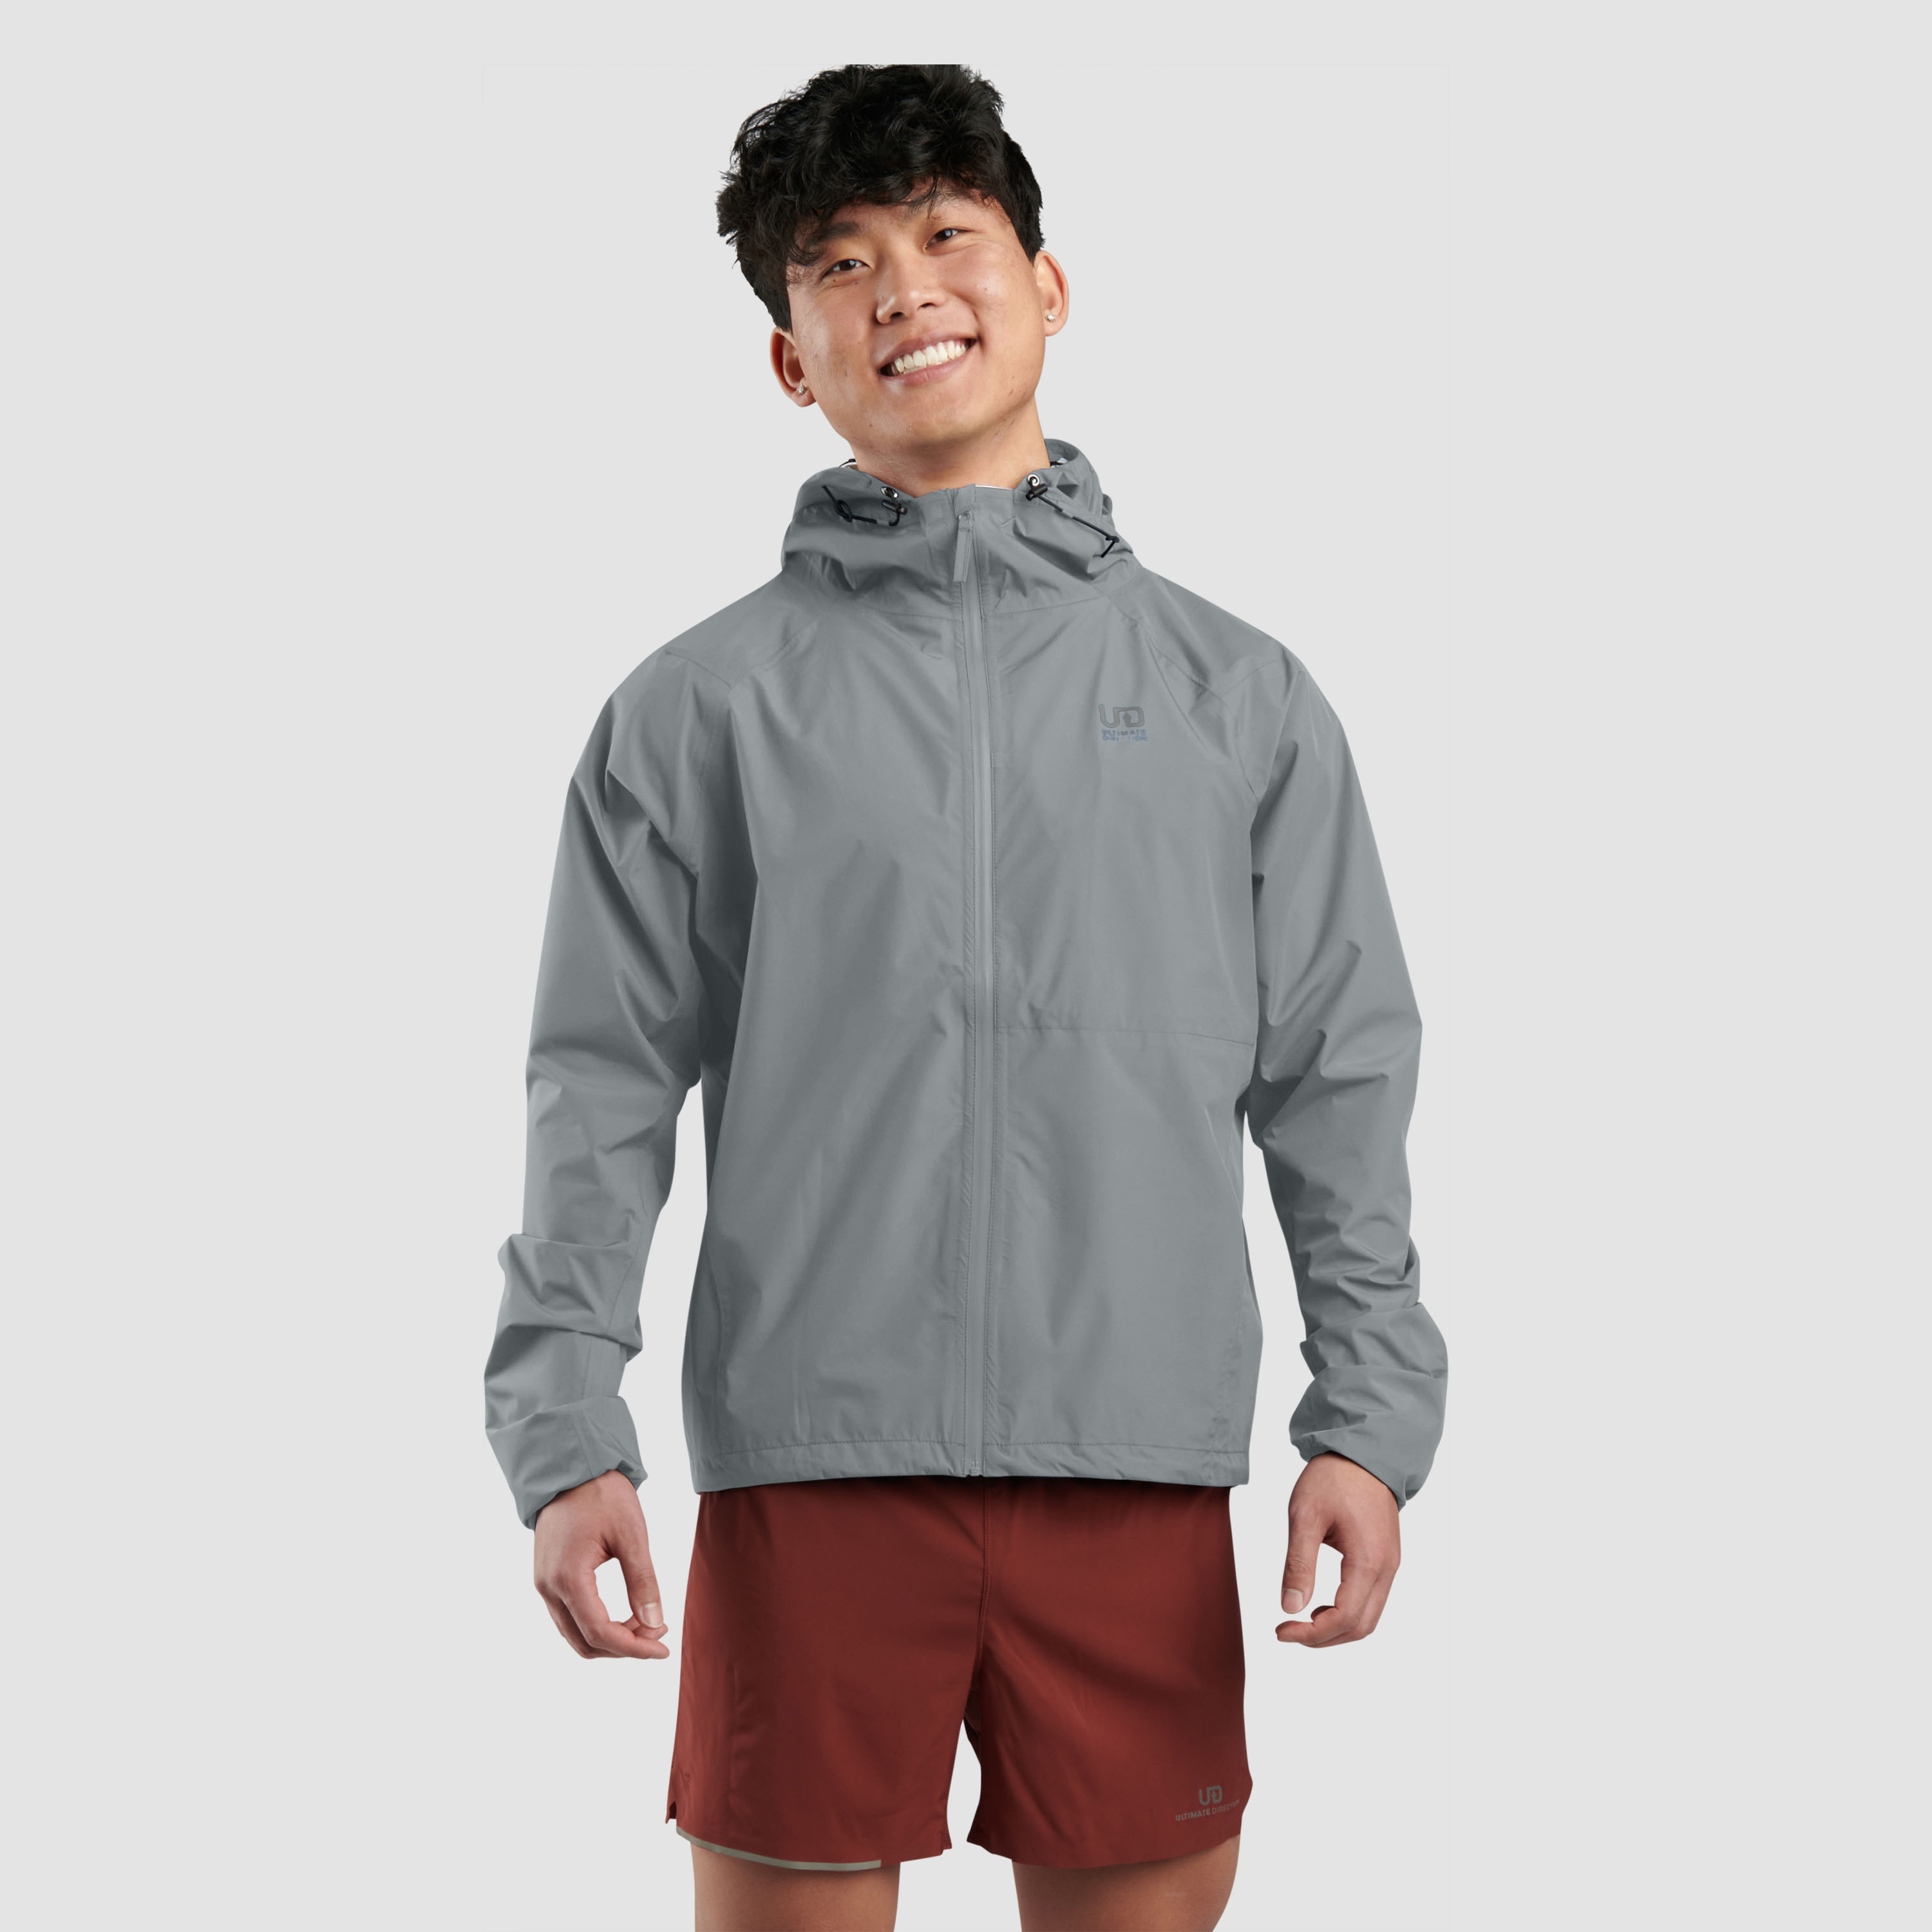 Ultimate Direction Men's Deluge Jacket in Gray Size Medium